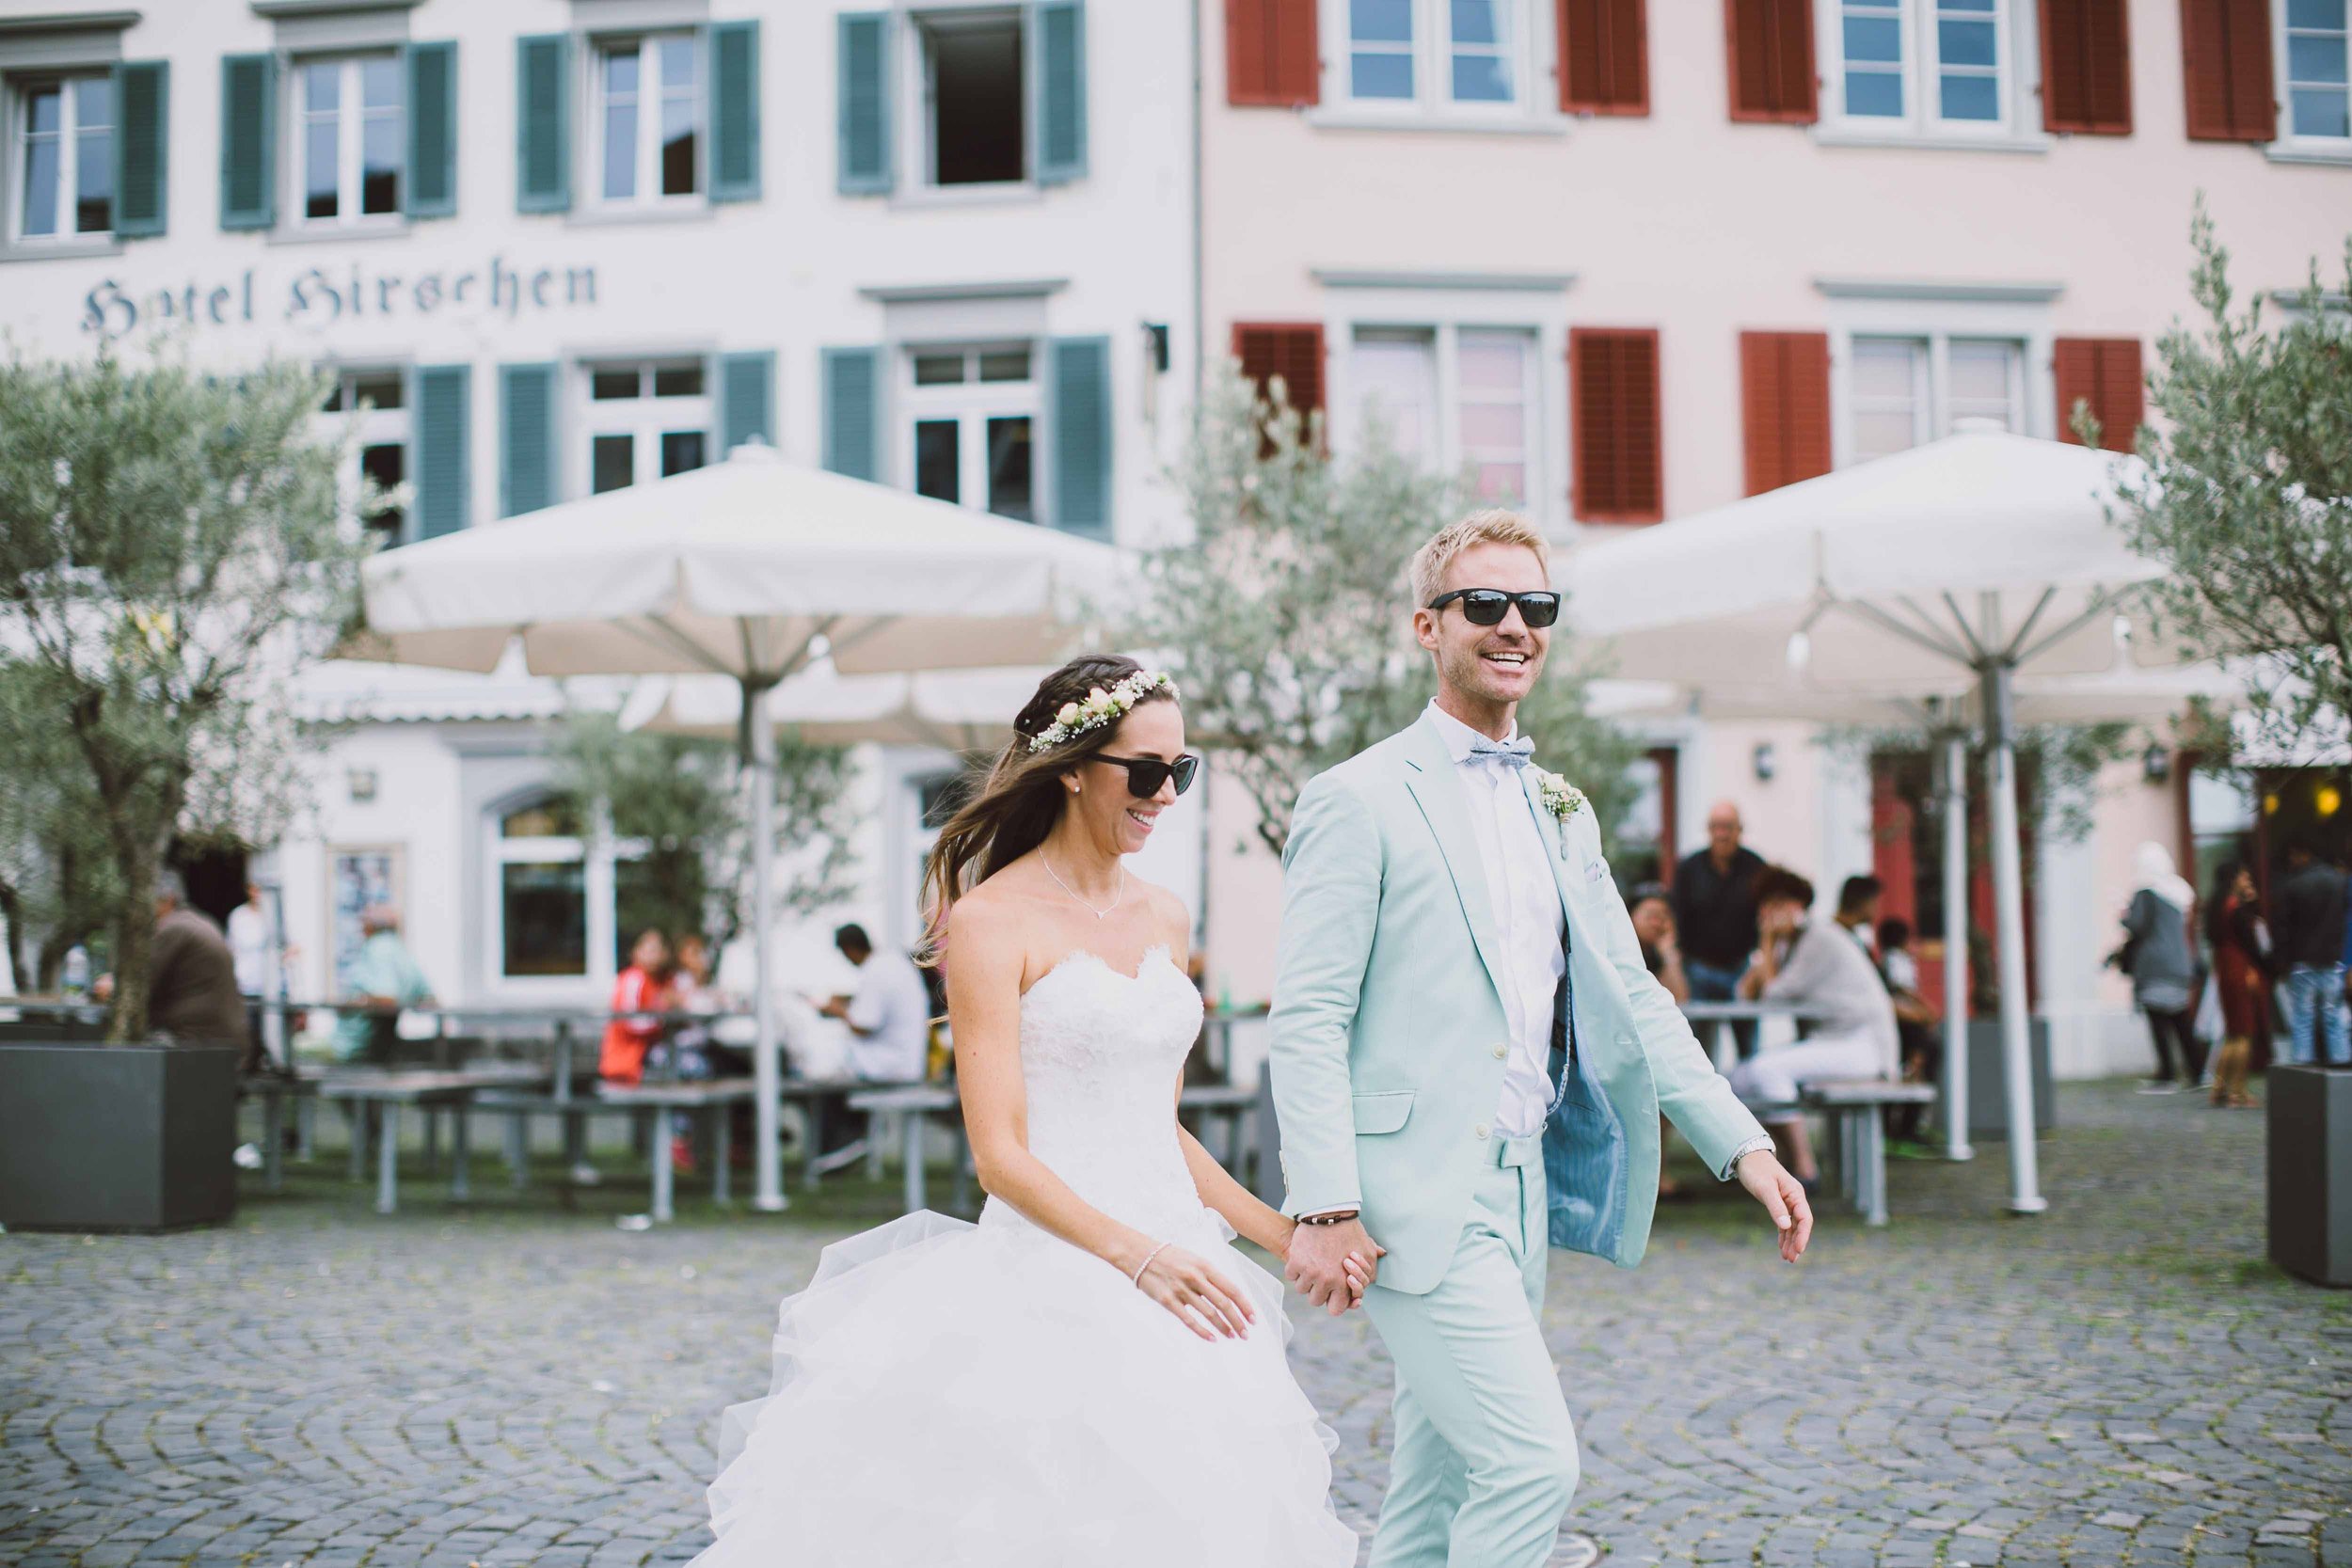 simona & maik_wedding_nice4youreyes.de (156)_wedding_hochzeit_Bayern.jpg